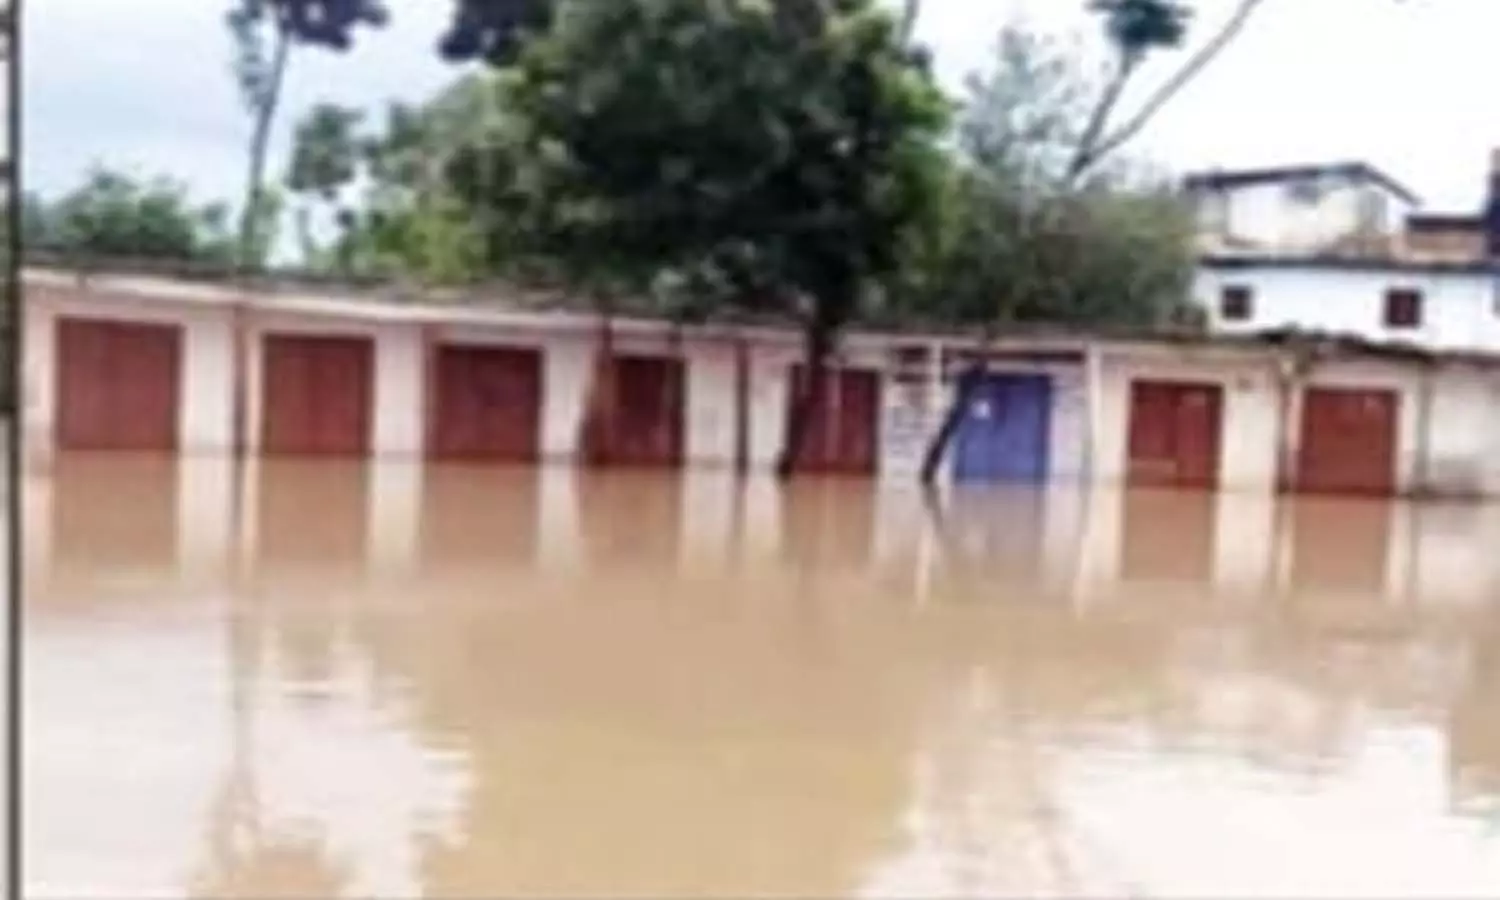 Flood in Kushinagar: Shivpur intersection of Khadda area submerged with flood water